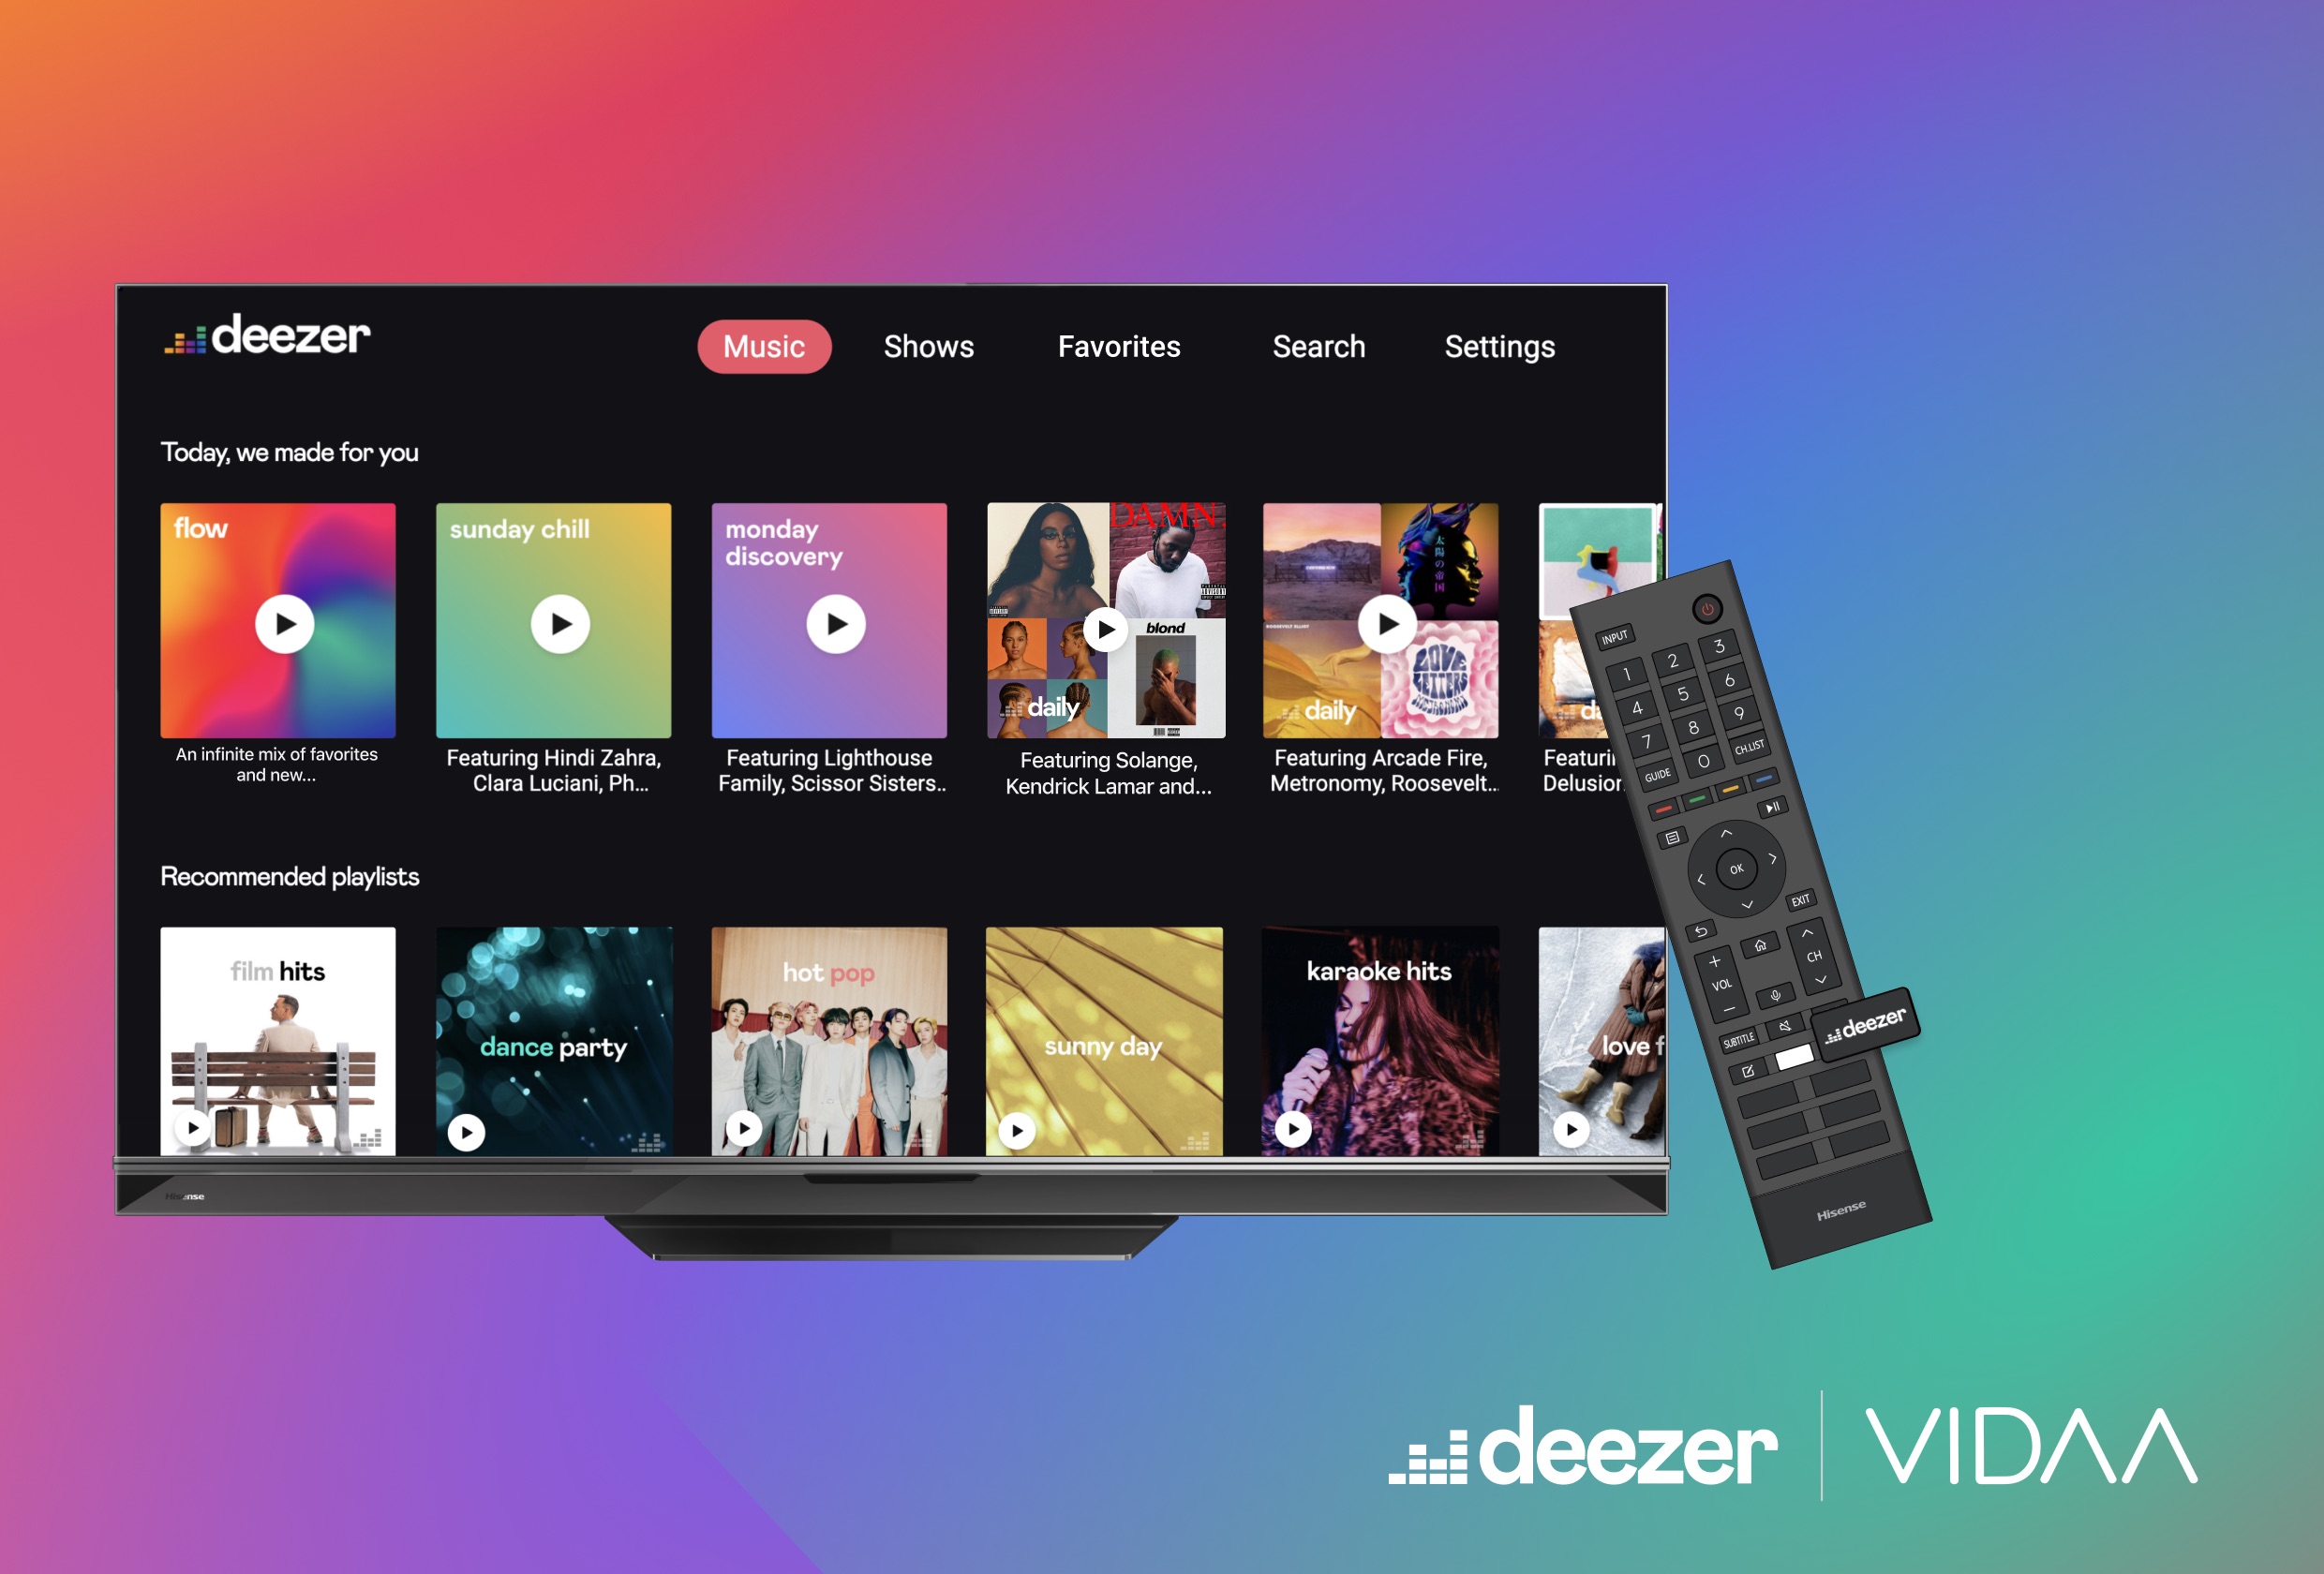 Deezer is now available on Hisense, Toshiba, Loewe and other smart TVs via the VIDAA platform